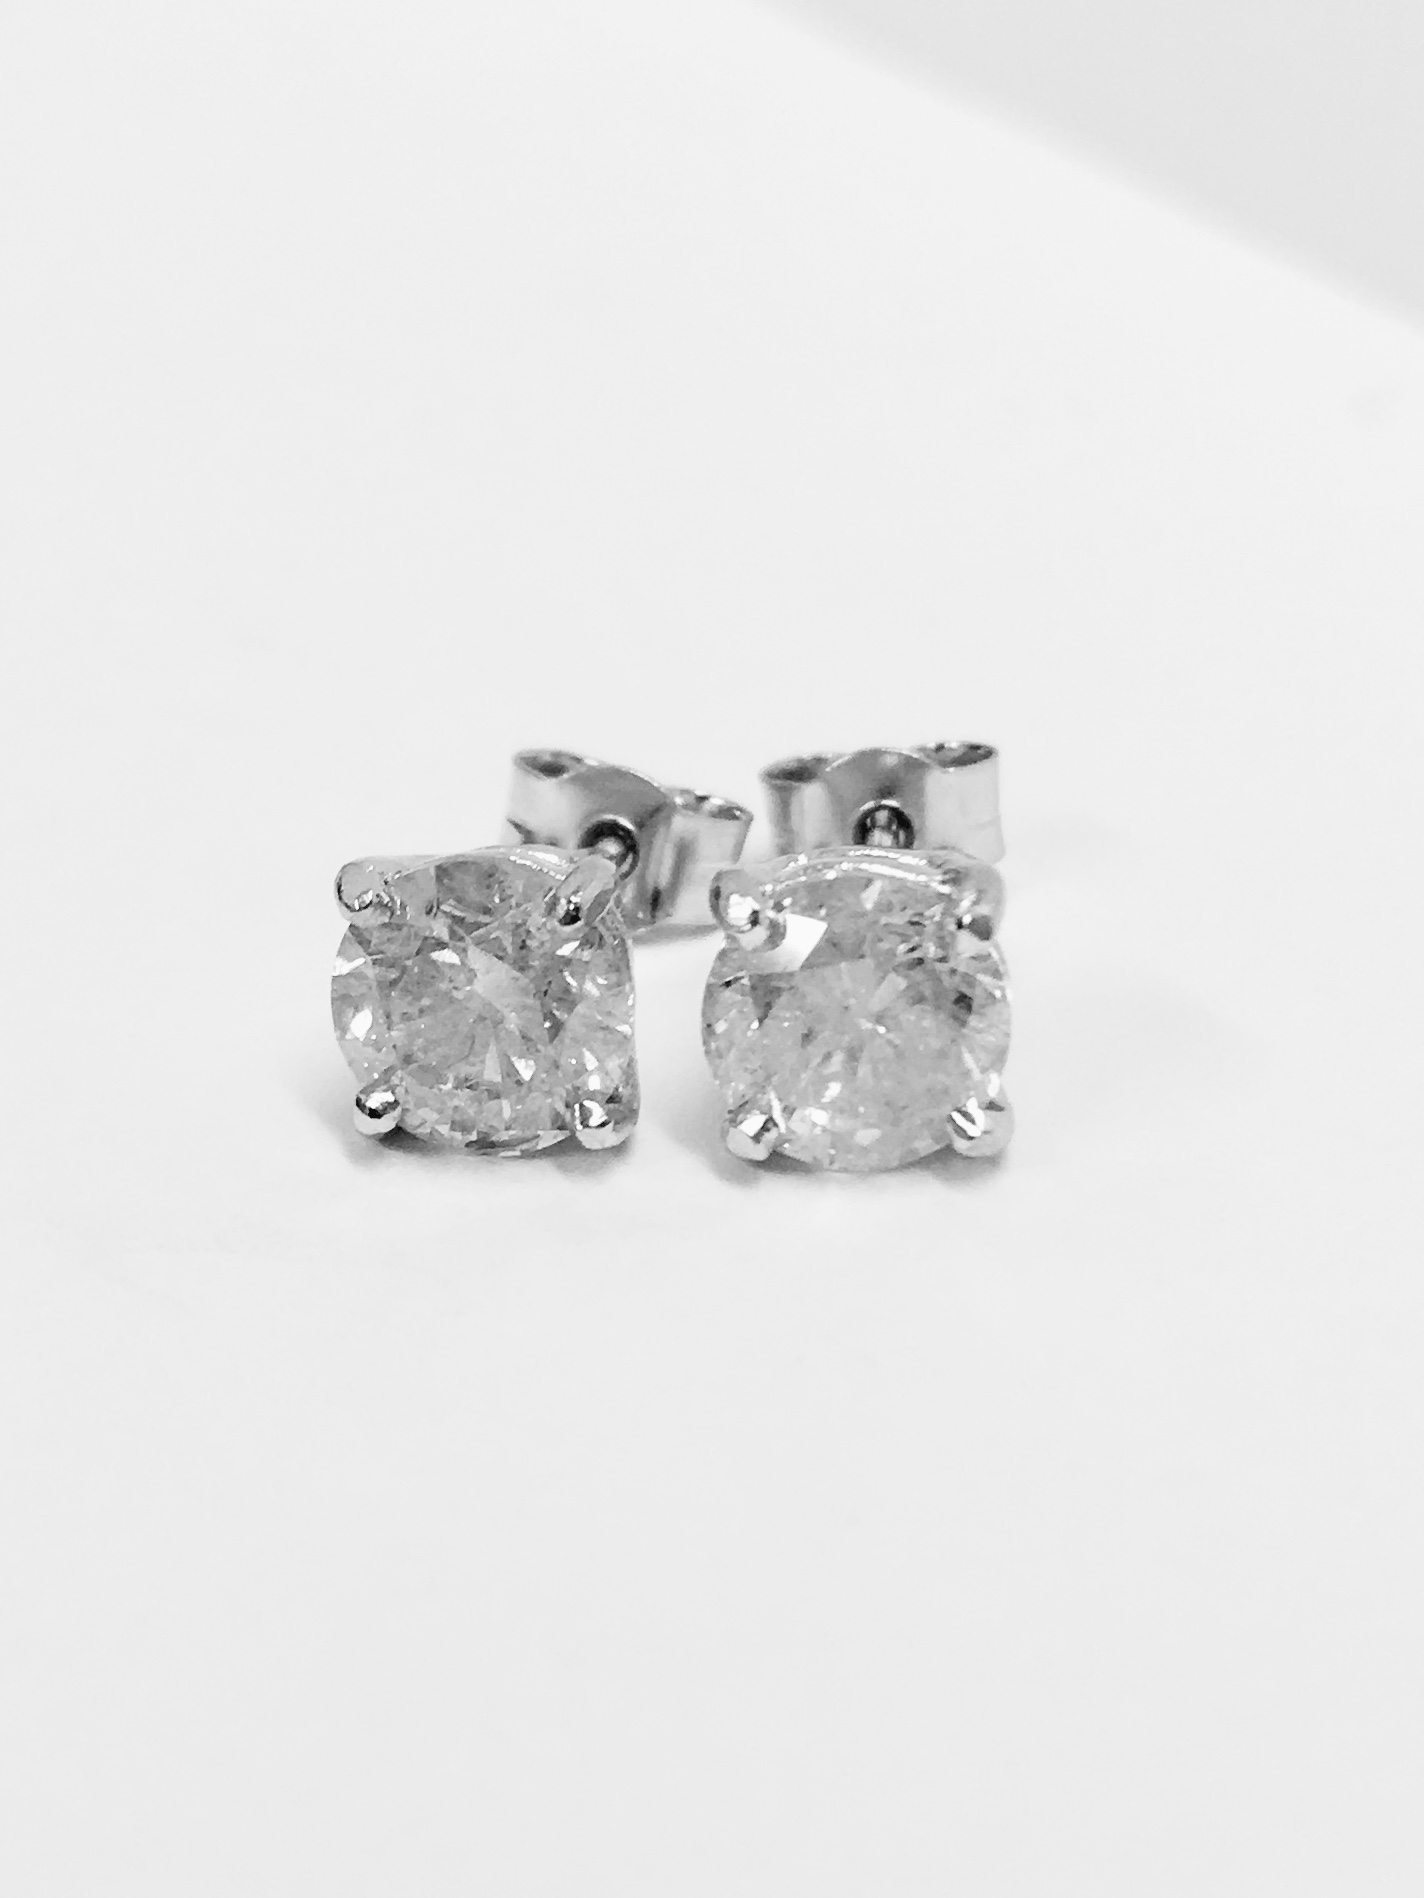 1ct diamond solitaire earrings